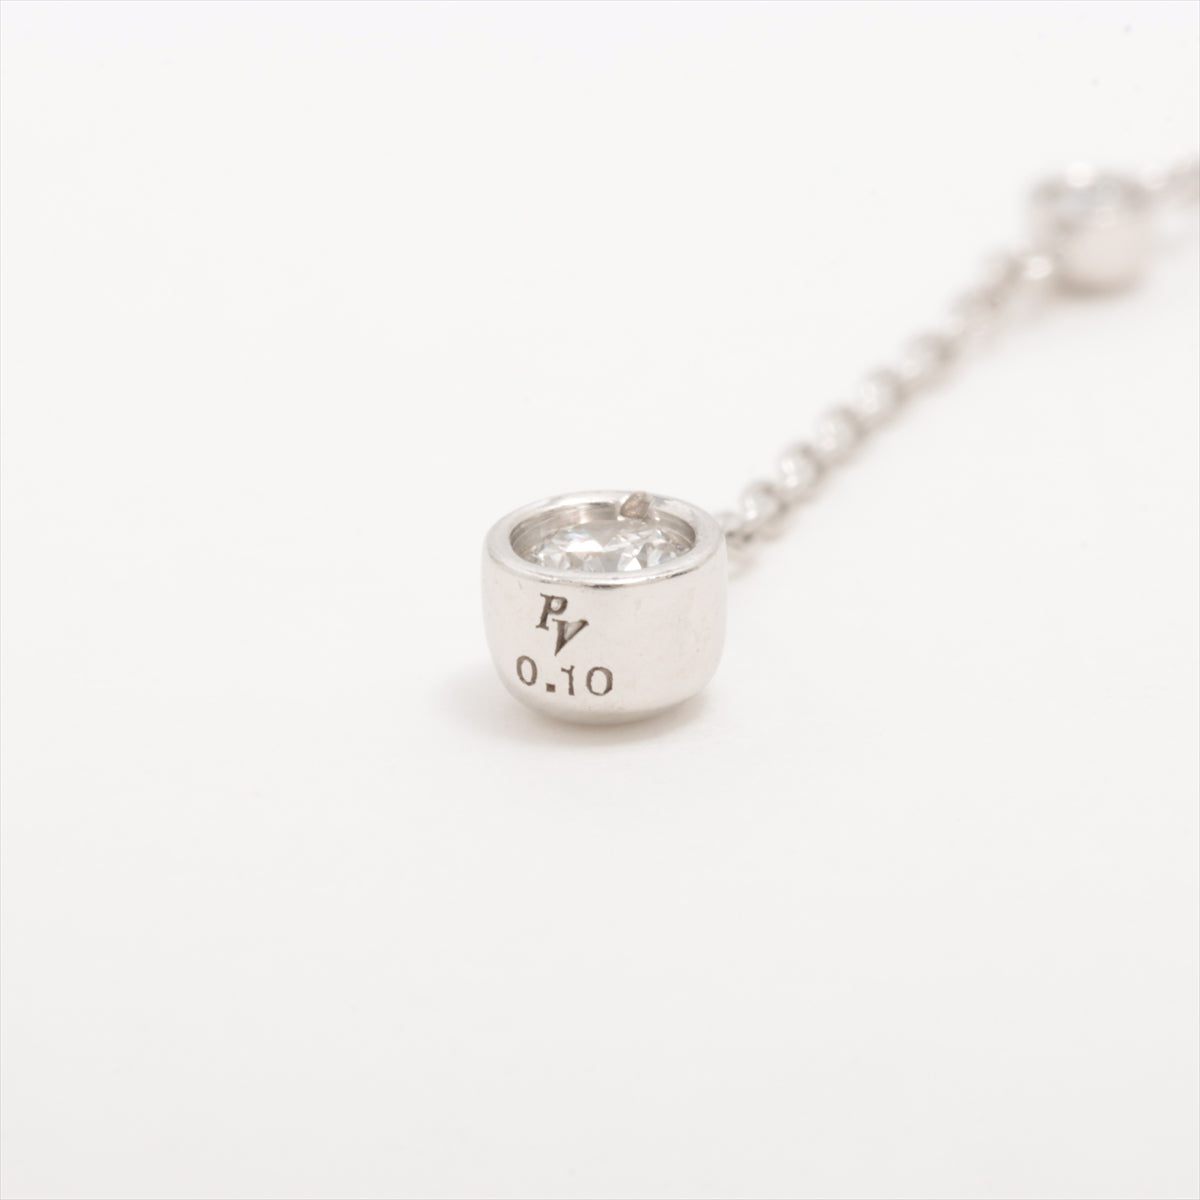 Ponte Vecchio diamond Piercing jewelry K18WG 1.8g 0.10 0.10